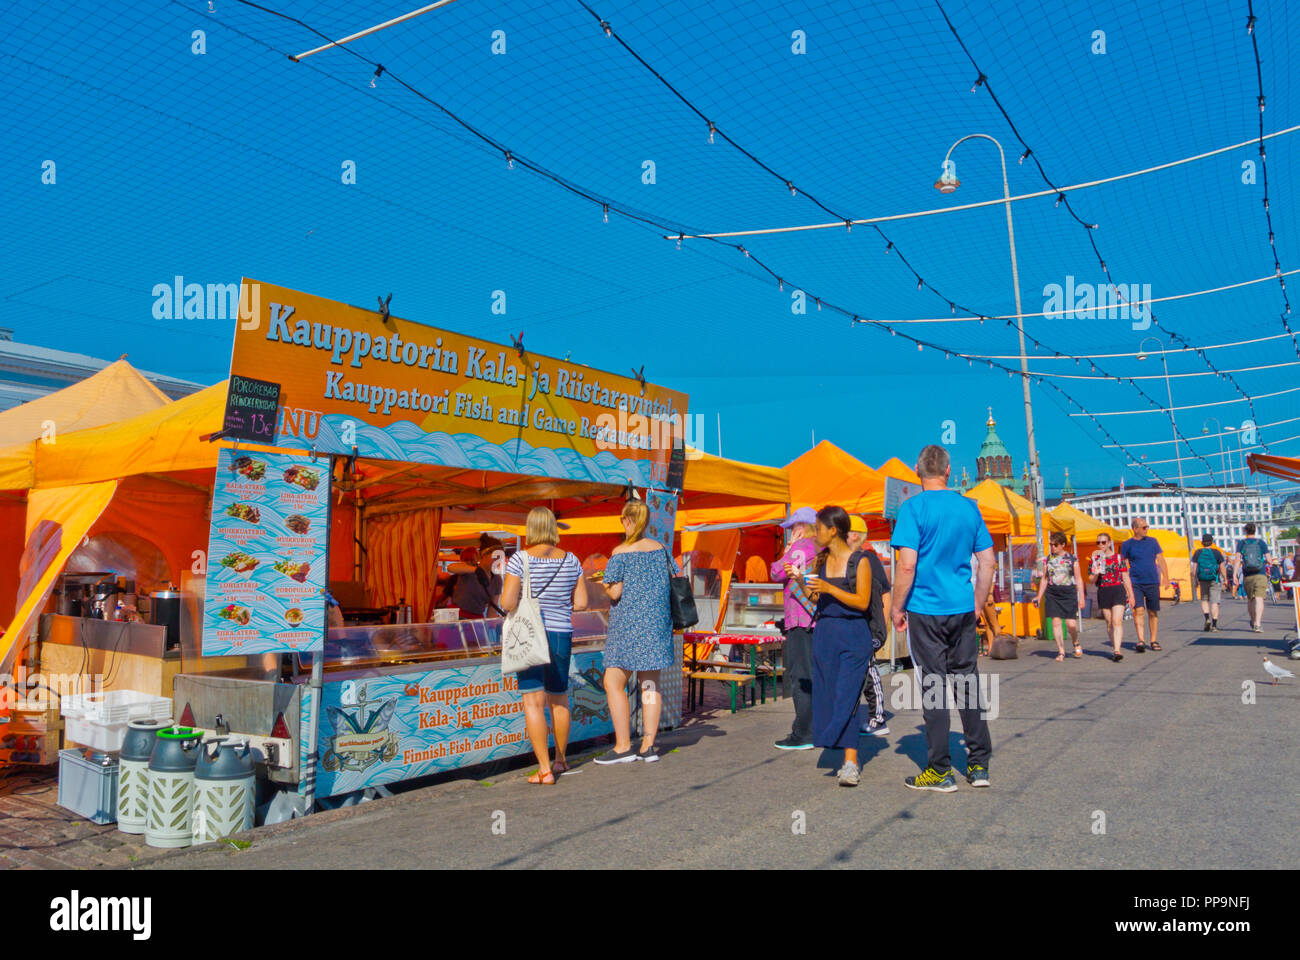 Food stall for tourists, Kauppatori, market square, Helsinki, Finland Stock Photo